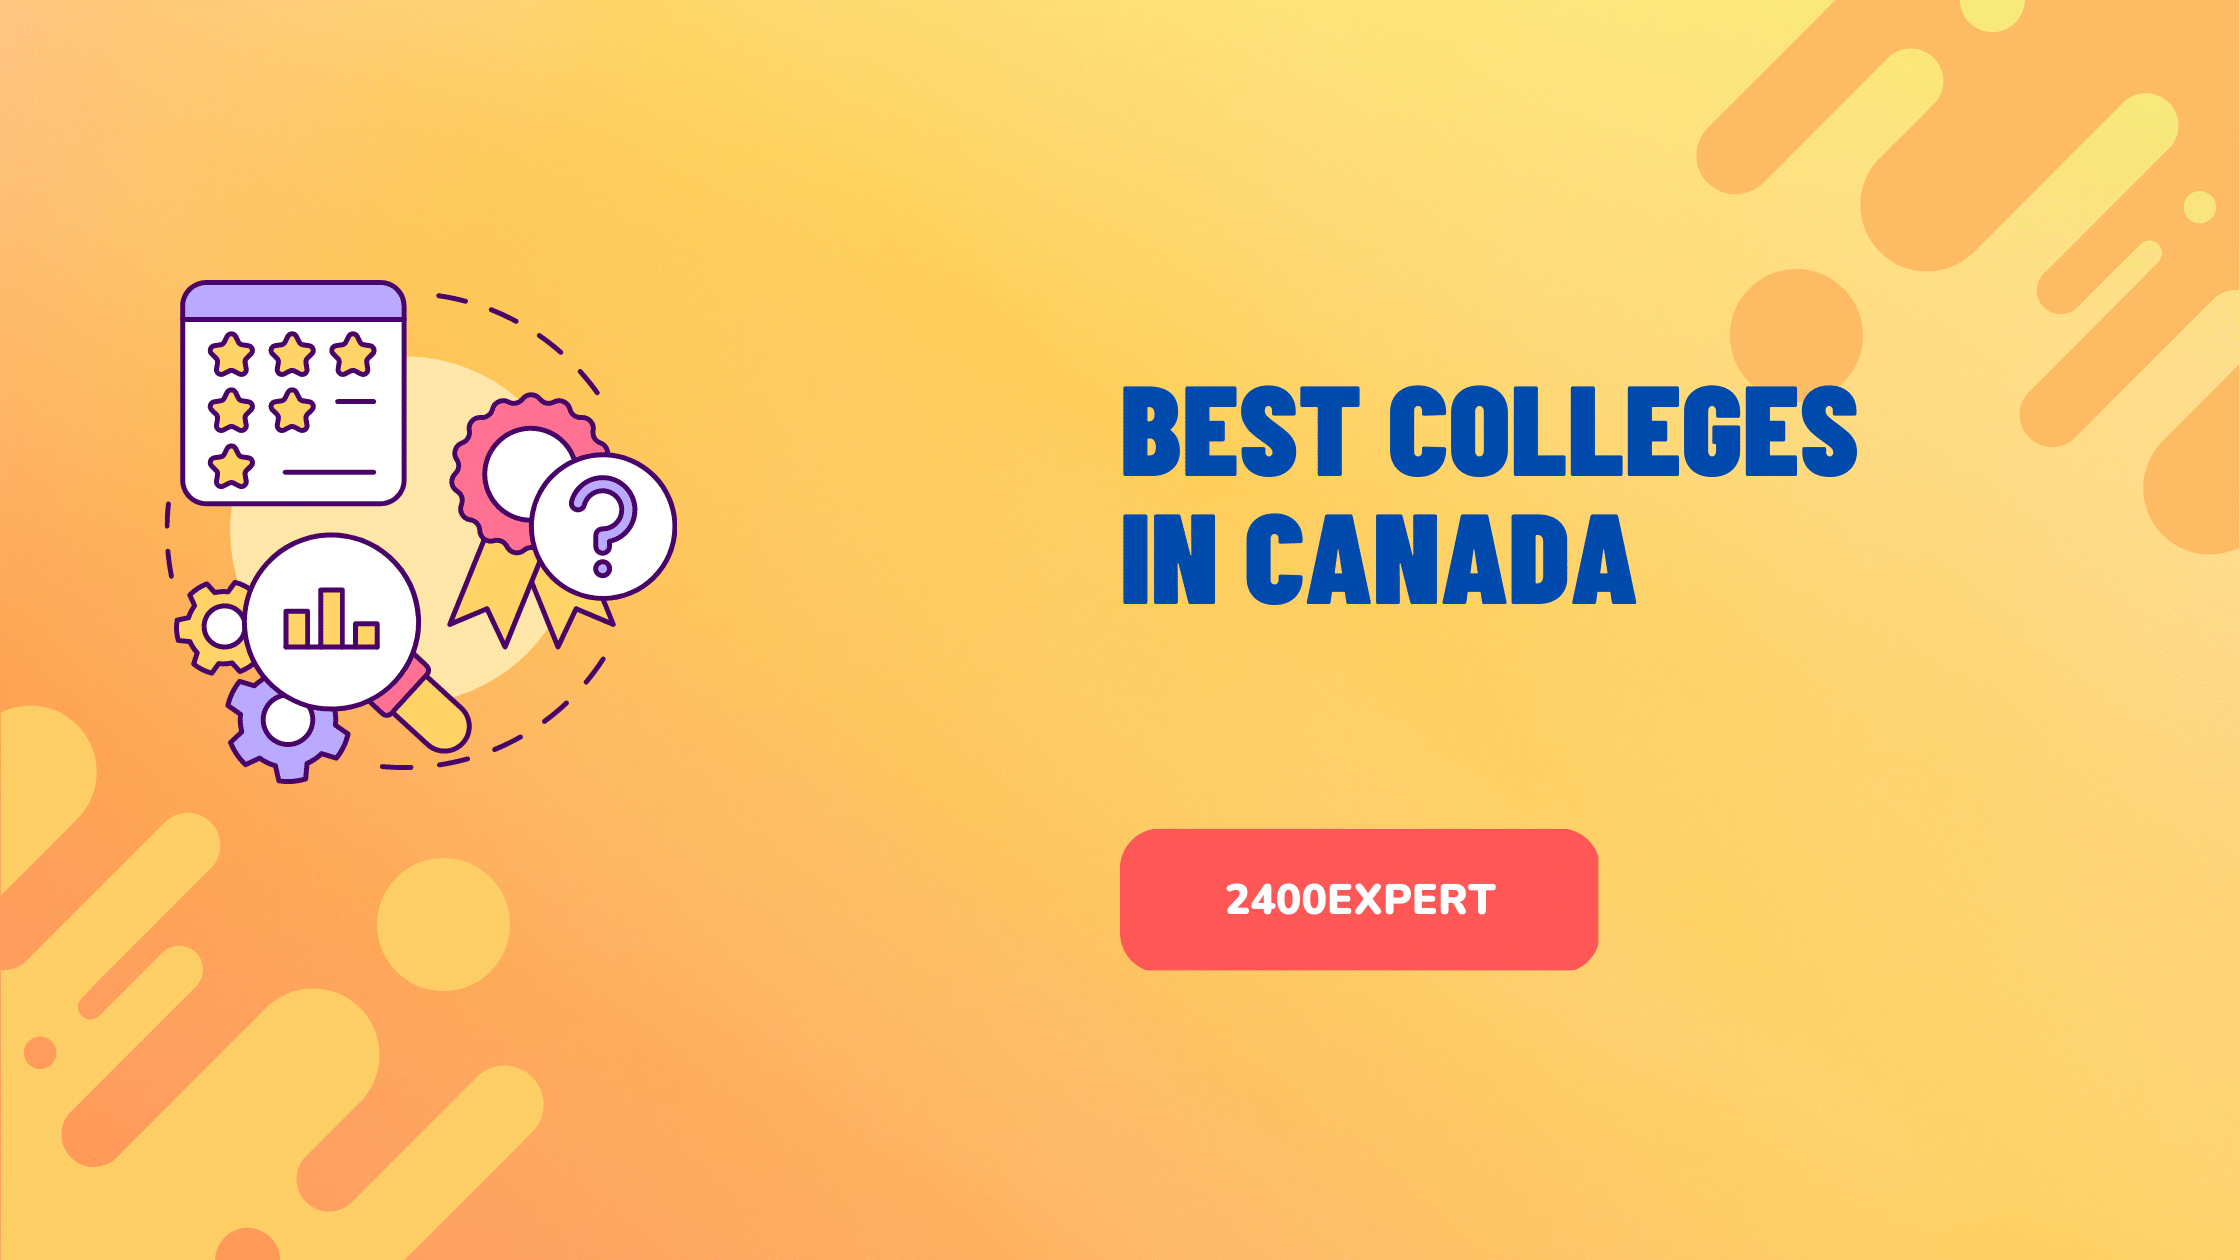 Best Colleges In Canada 2400Expert 